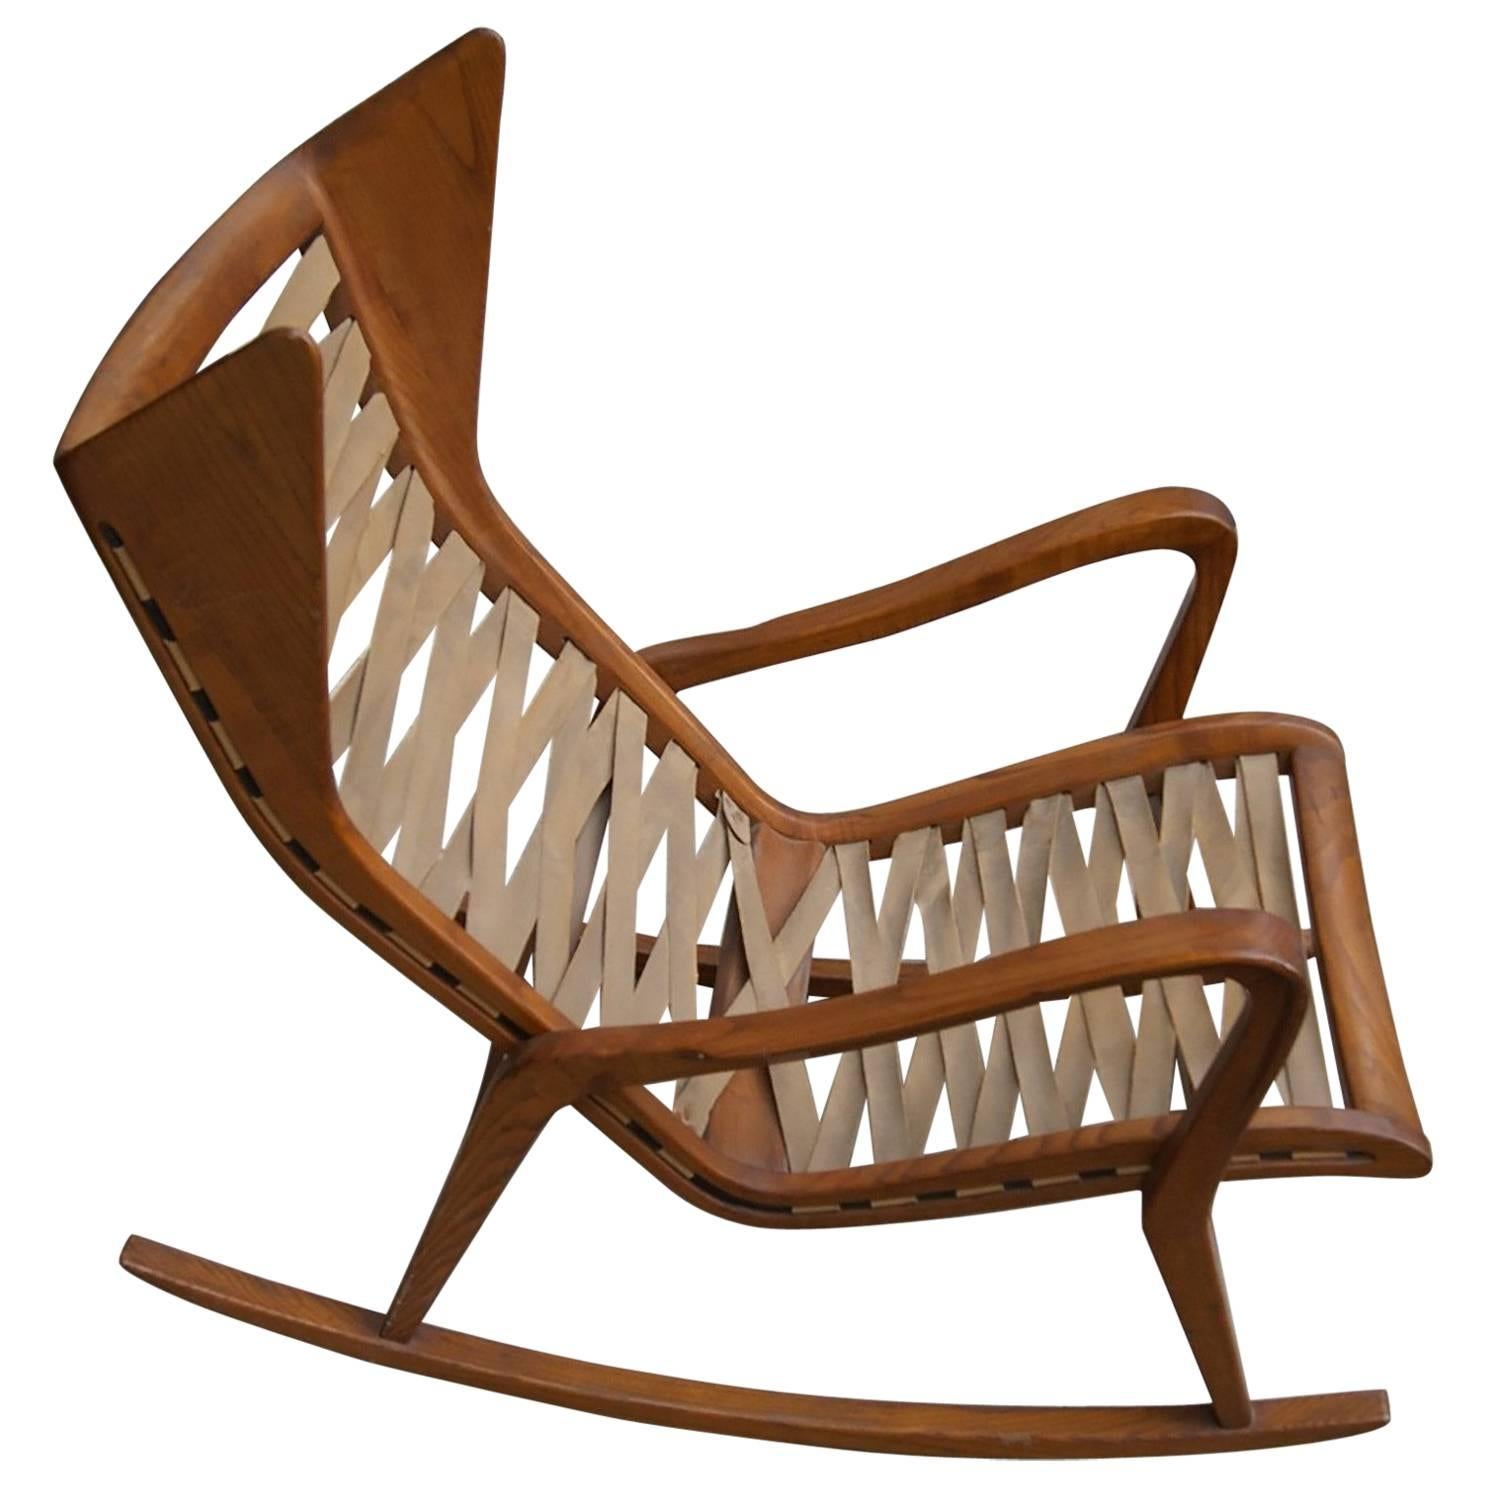 Italian Rocking Chair designed by Studio Tecnico Cassina, Milano, 1955